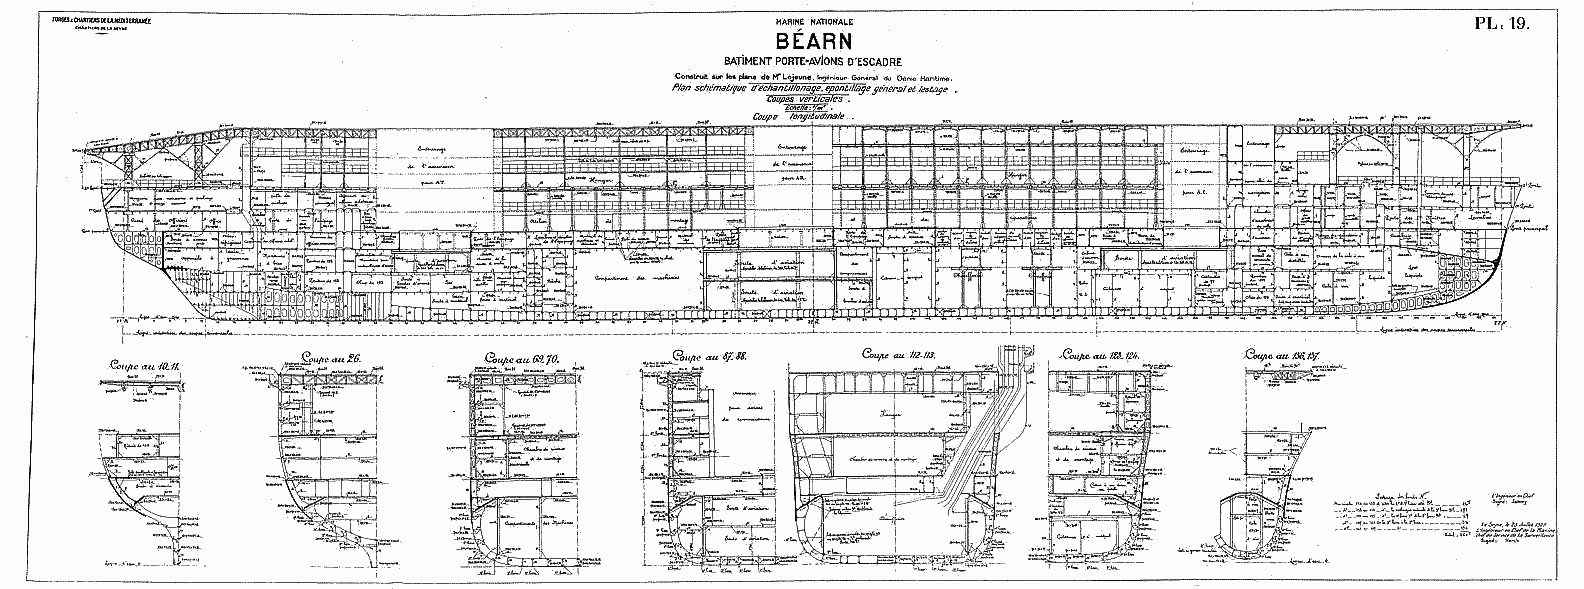 Bearn blueprints 5